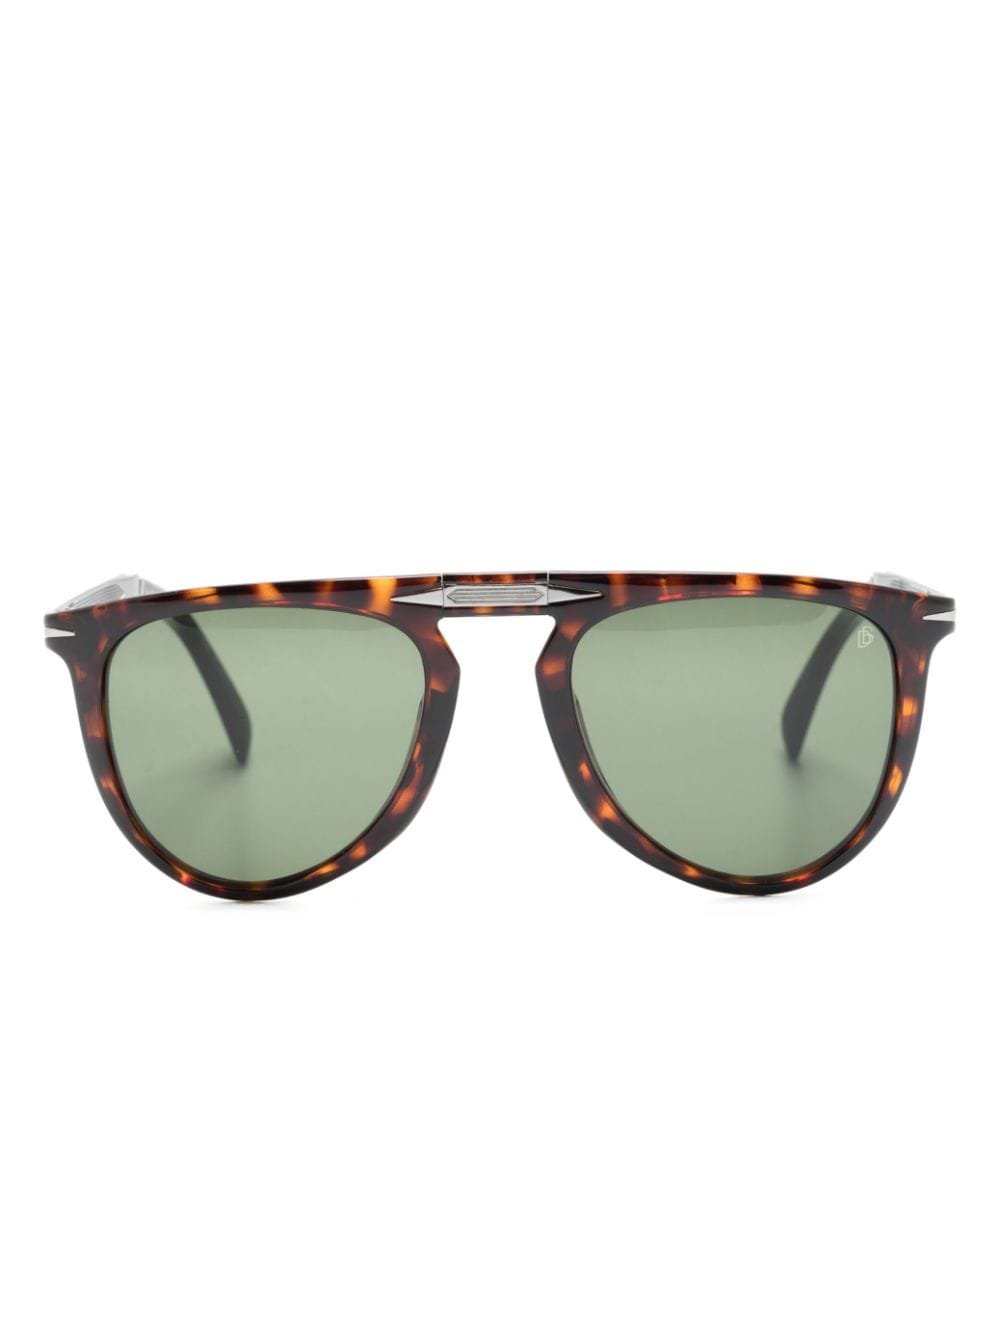 Eyewear by David Beckham tortoiseshell pilot-frame sunglasses - Brown von Eyewear by David Beckham